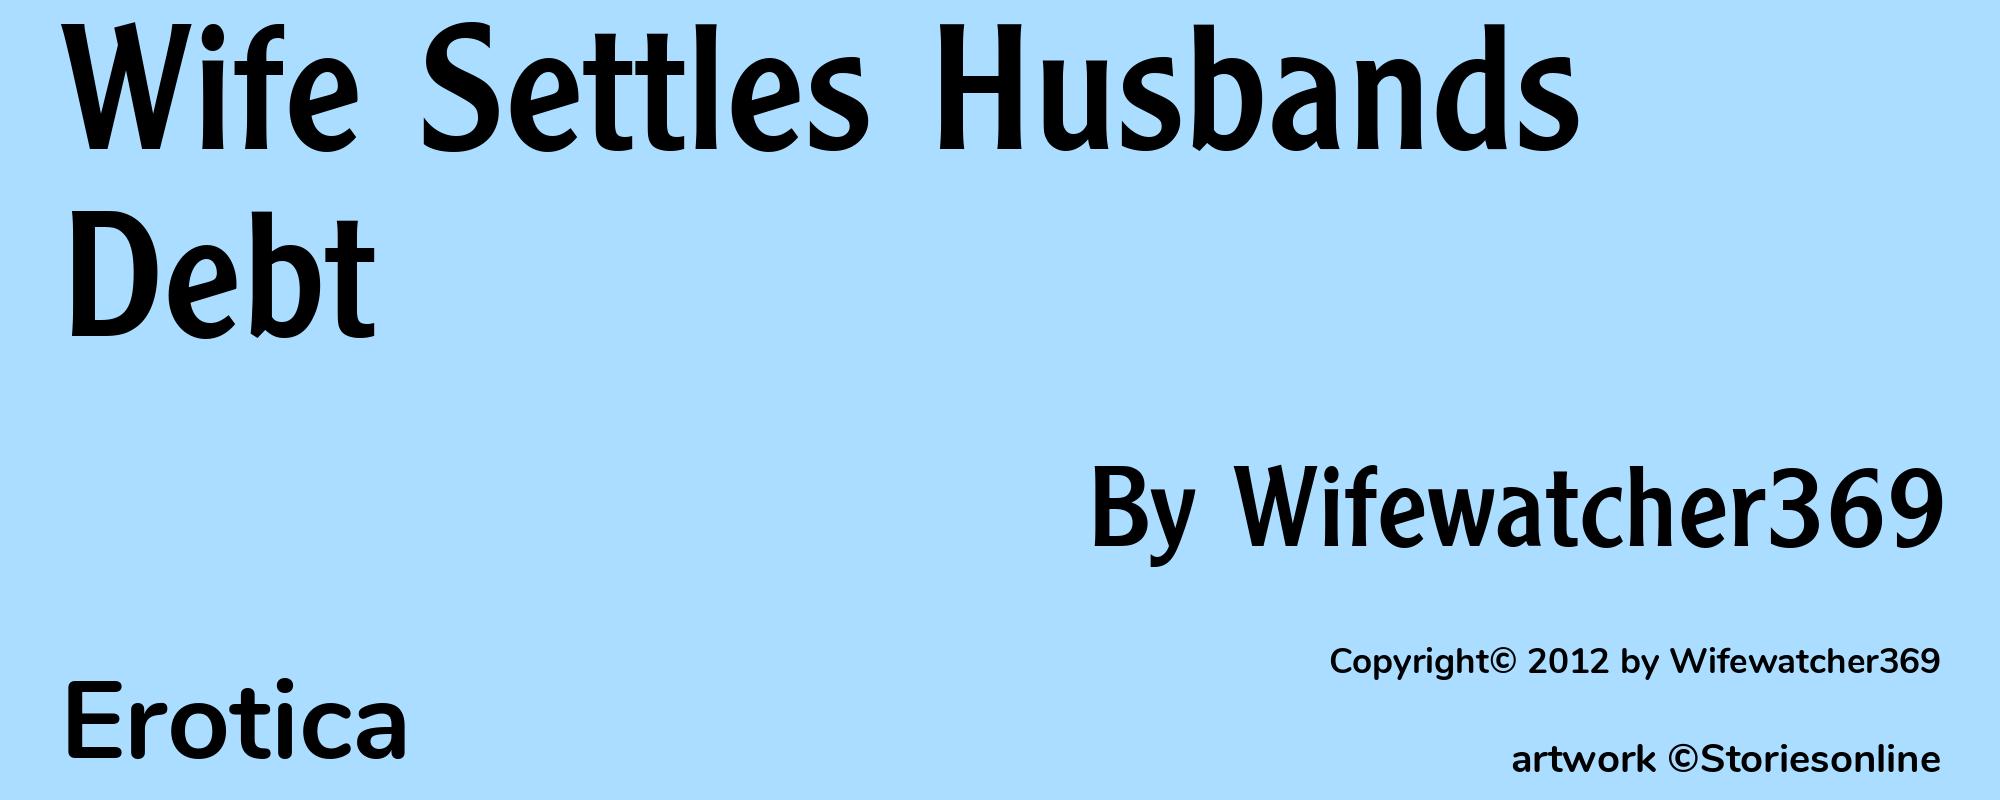 Wife Settles Husbands Debt - Cover